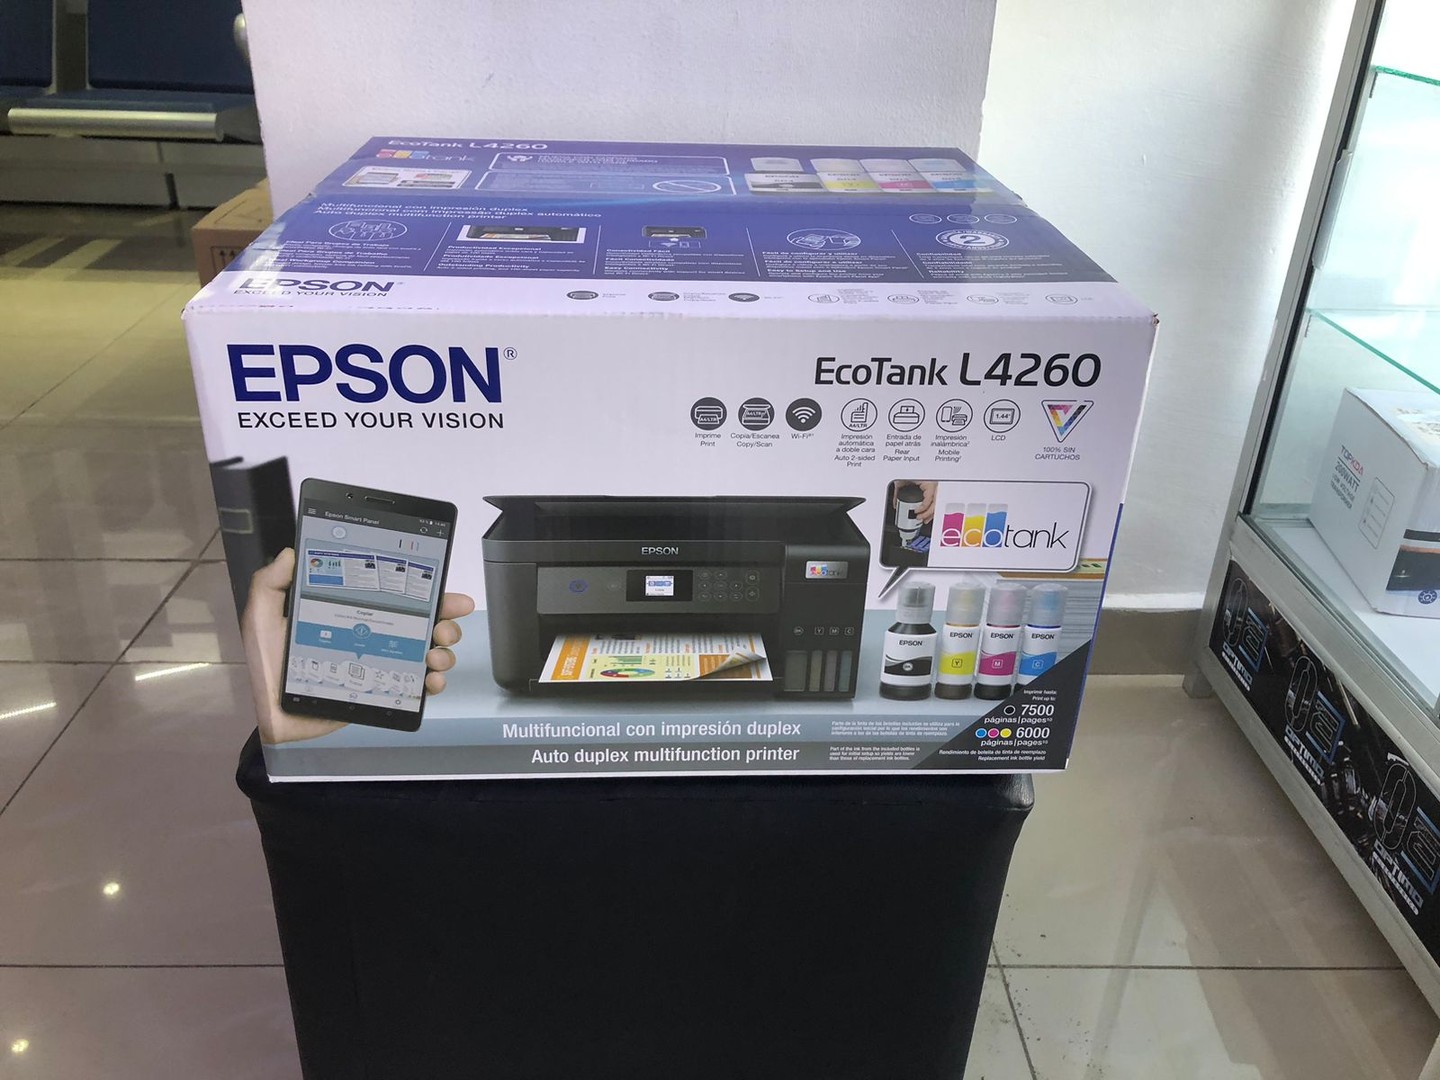 impresoras y scanners - Impresora Epson L4260 Multifuncion, Wifi y Cable USB - Pantalla LCD 1